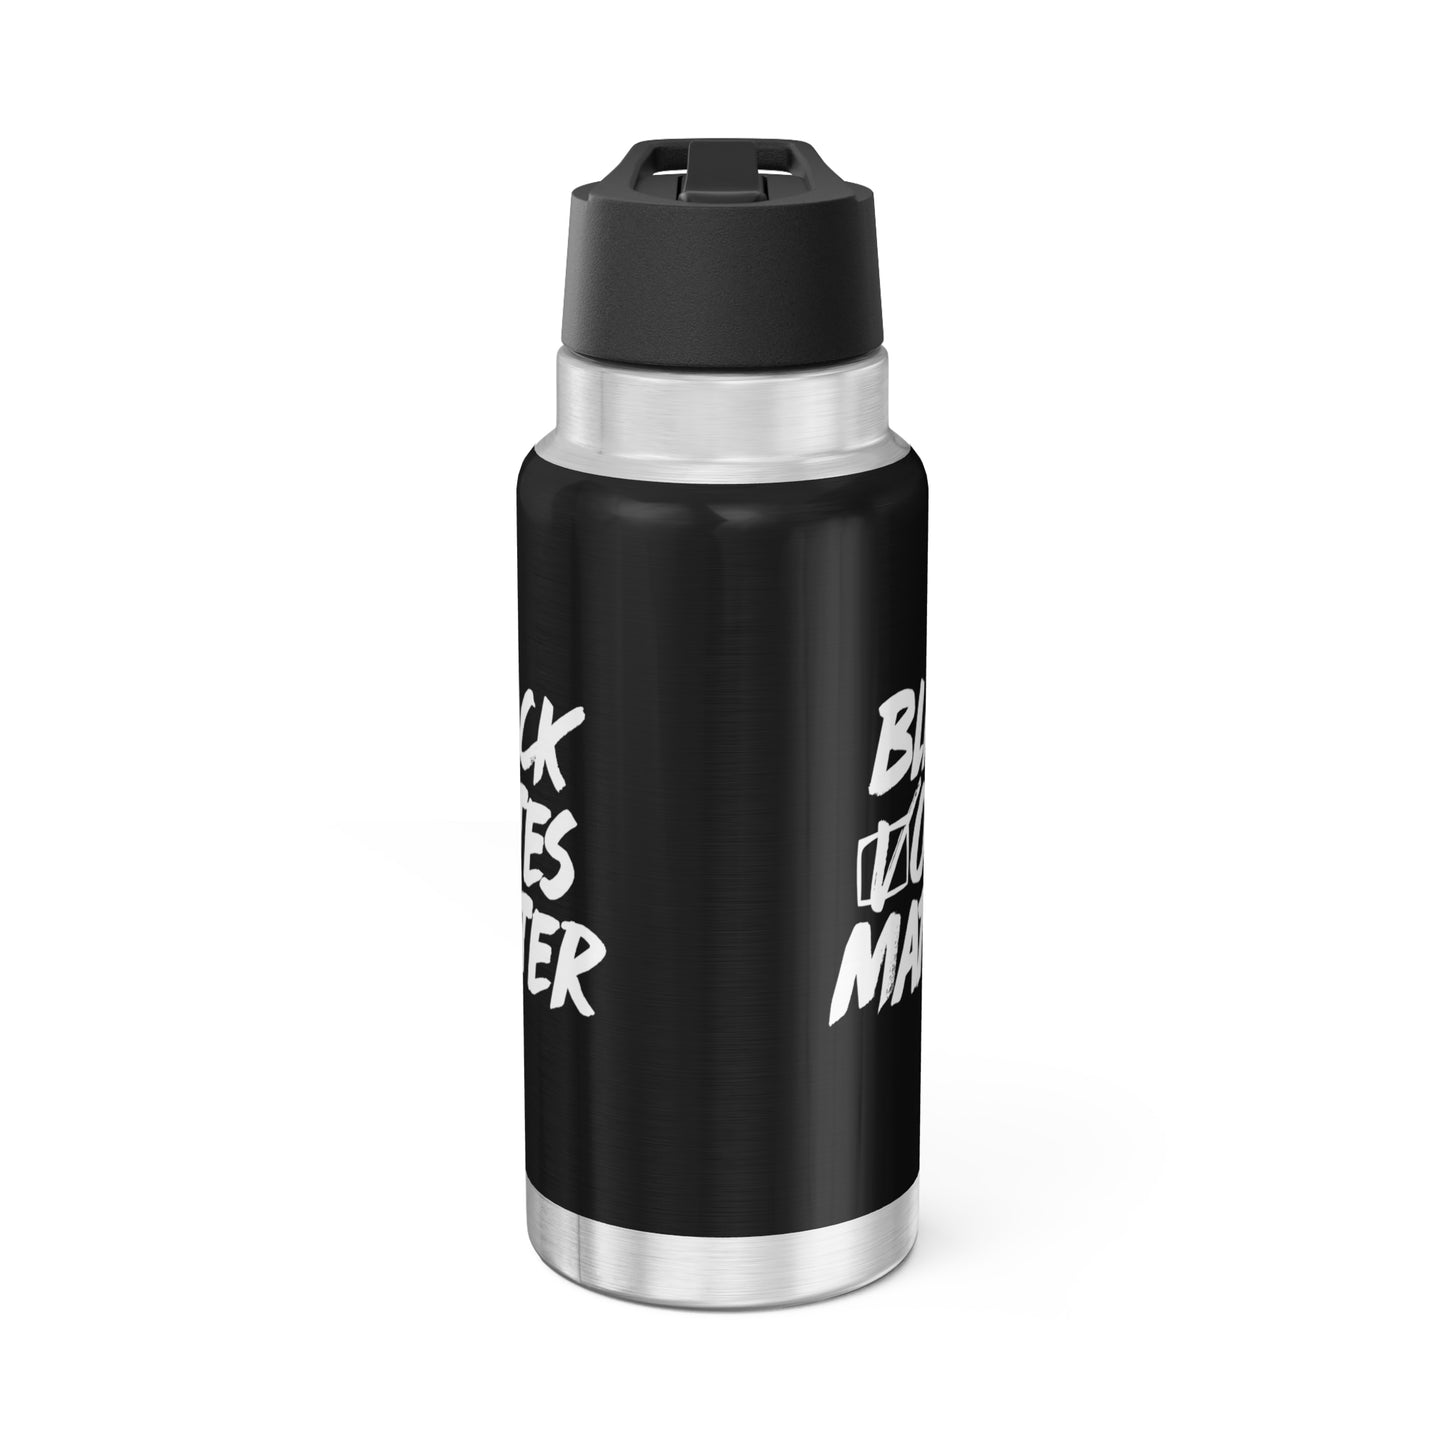 “Black Votes Matter (white text)” 32 oz. Tumbler/Water Bottle